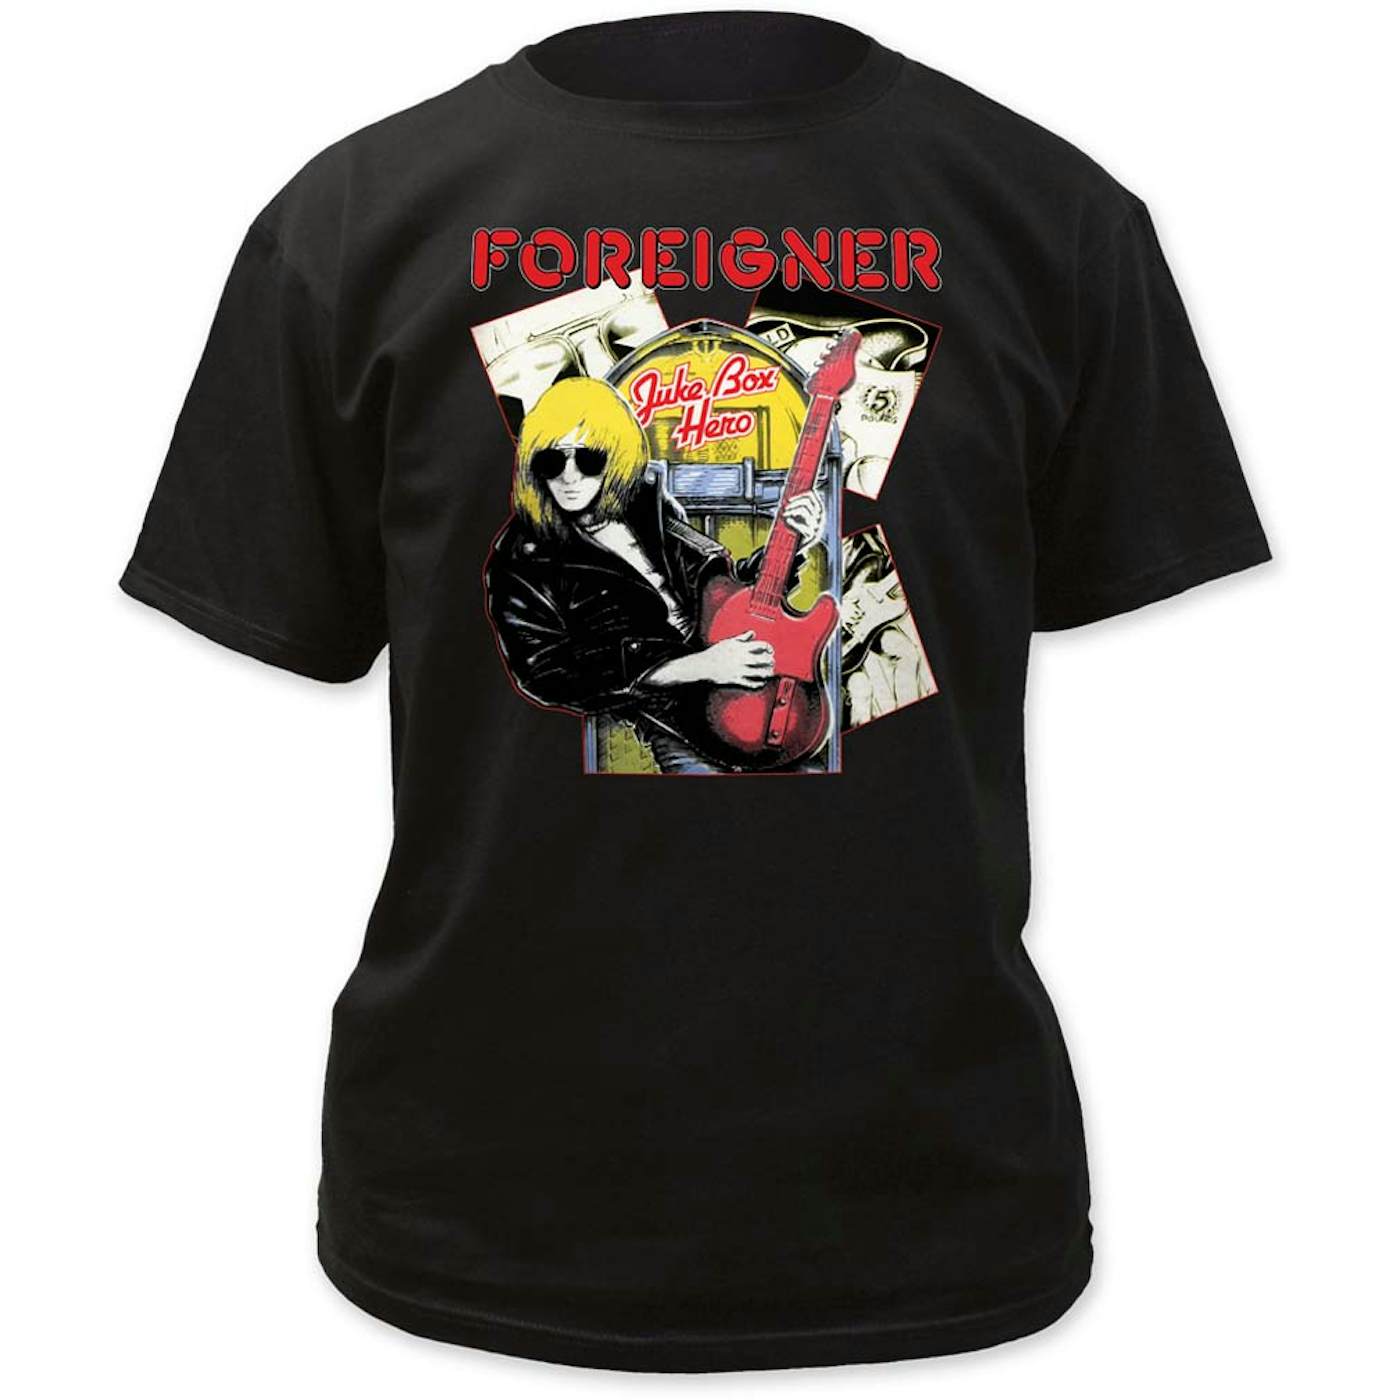 Foreigner T Shirt | Foreigner Juke Box Hero T-Shirt